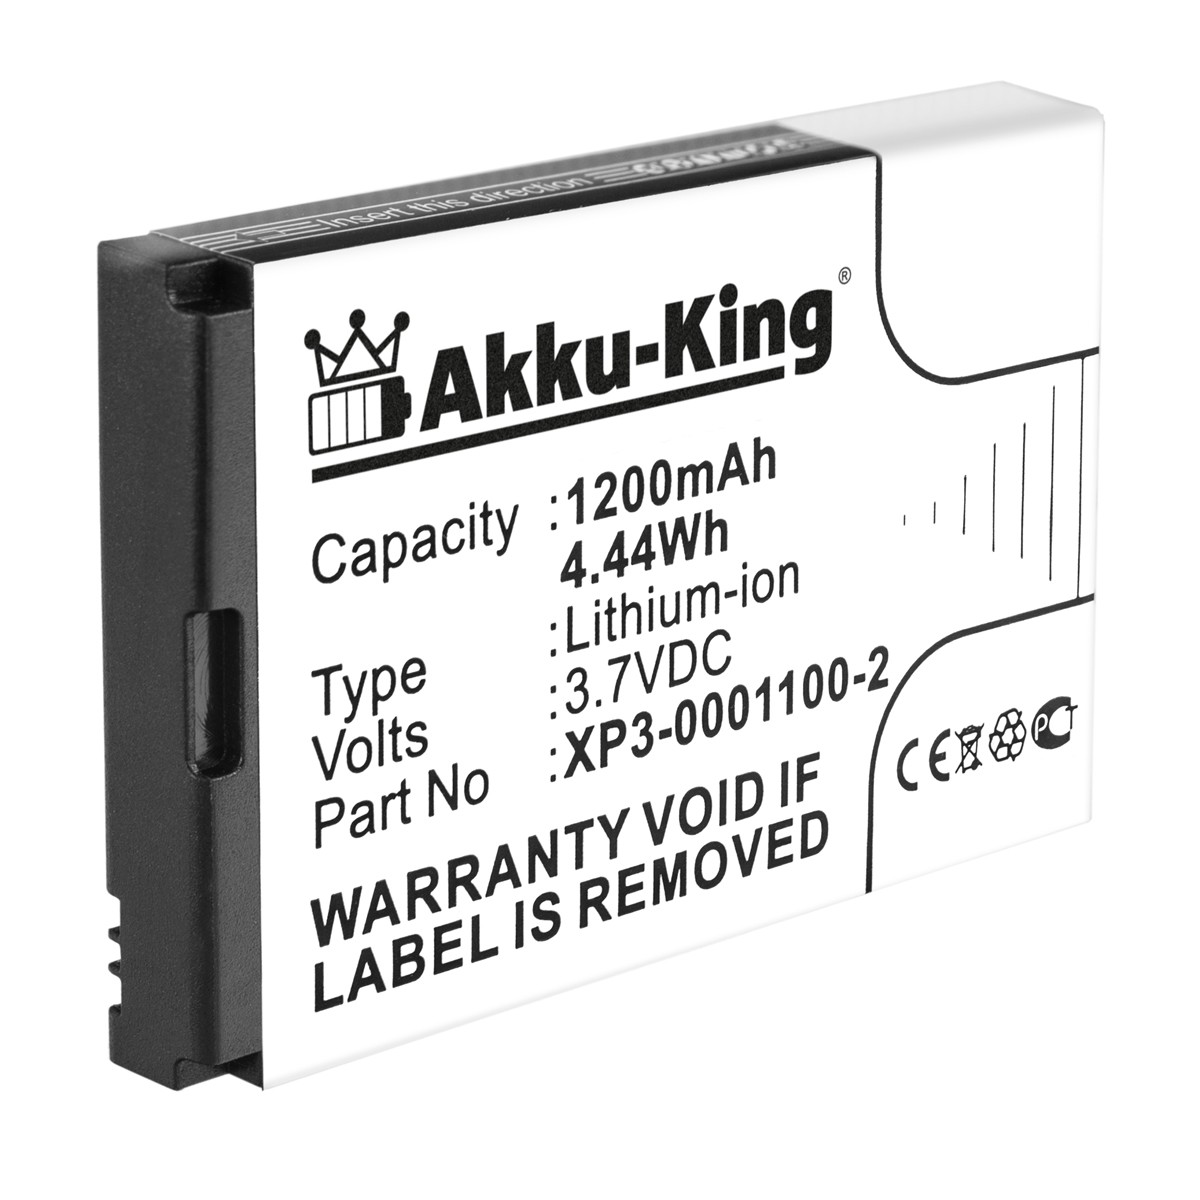 AKKU-KING Akku Li-Ion Volt, mit 3.7 1200mAh XP3-0001100-2 kompatibel Socketmobile Handy-Akku